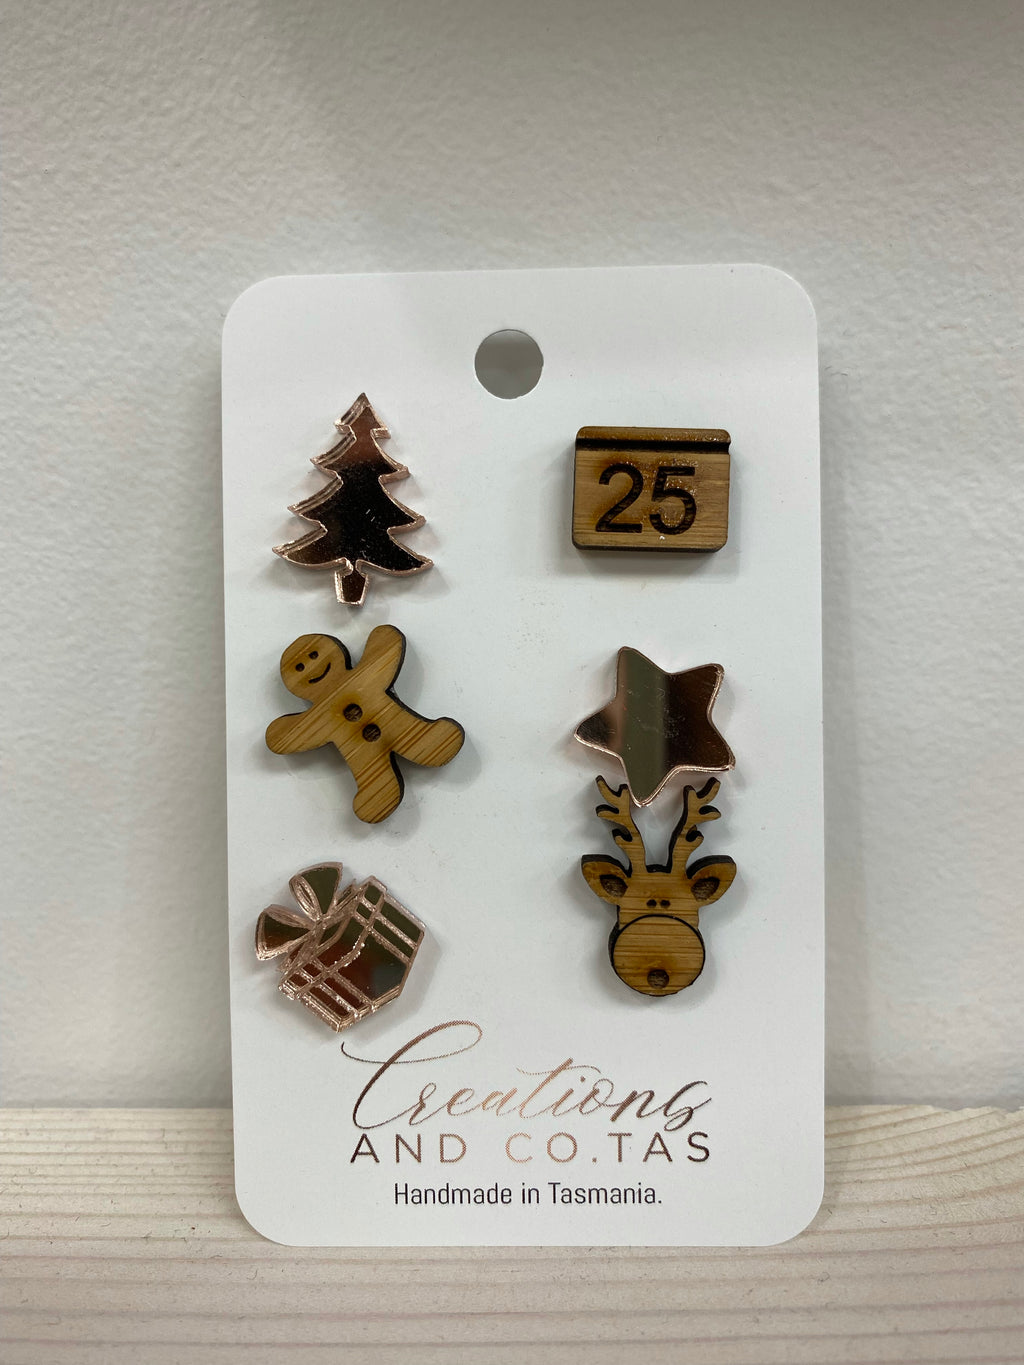 Christmas Packs - Creations and Co. Tas Handmade Earrings